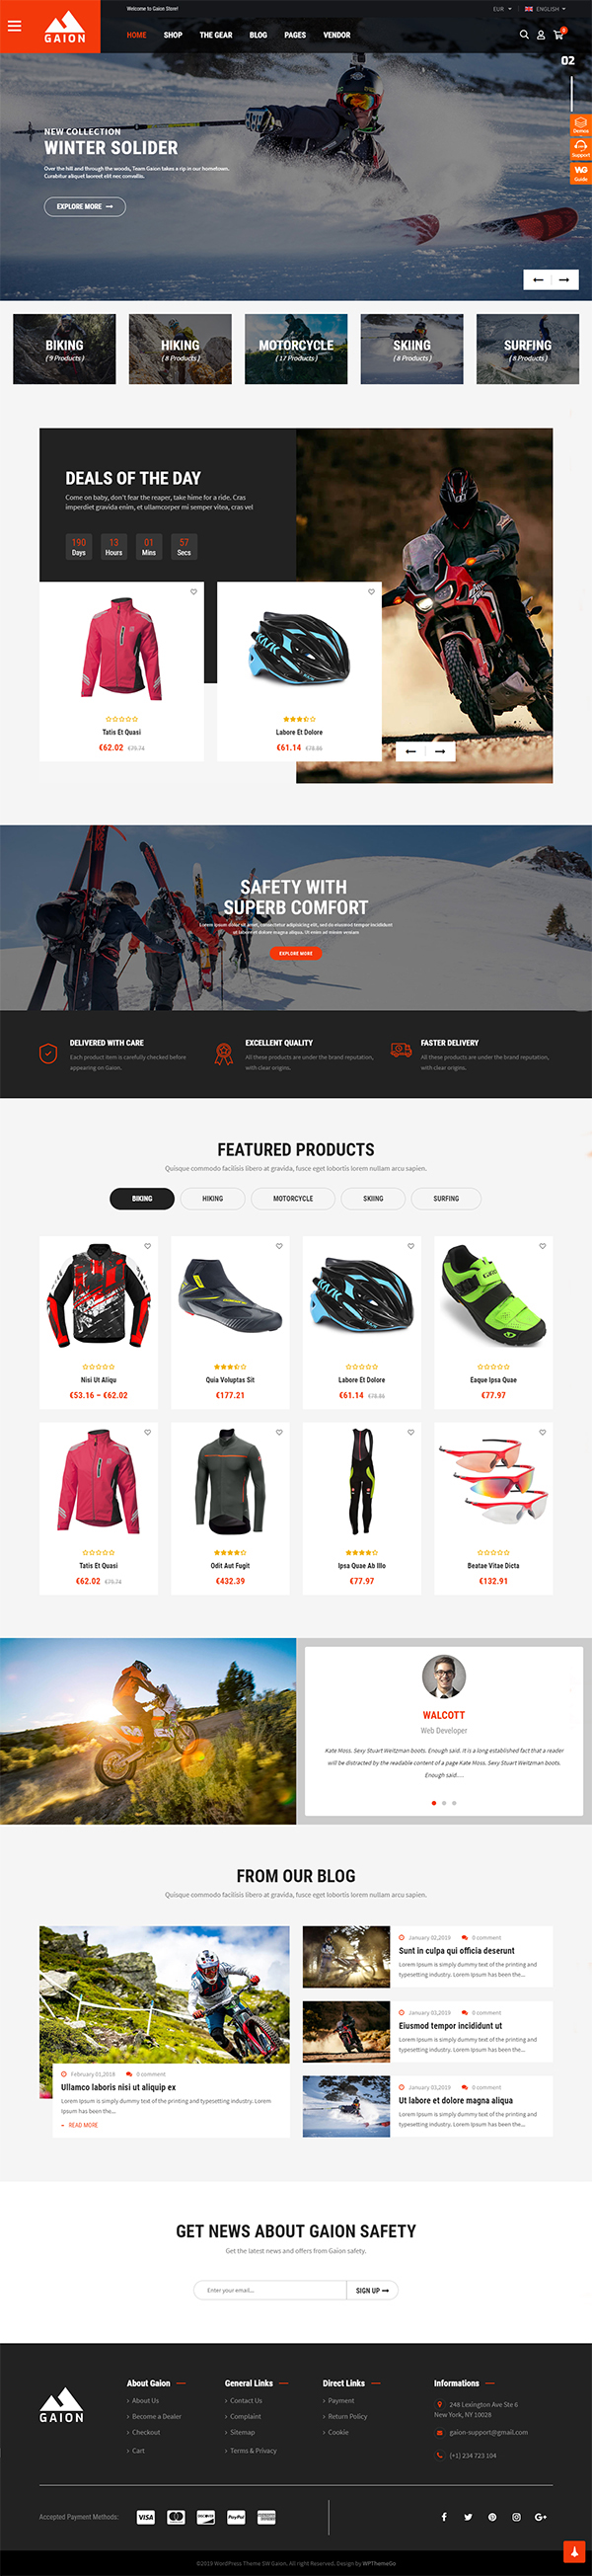 Gaion - Sport Accessories Shop WordPress WooCommerce Theme